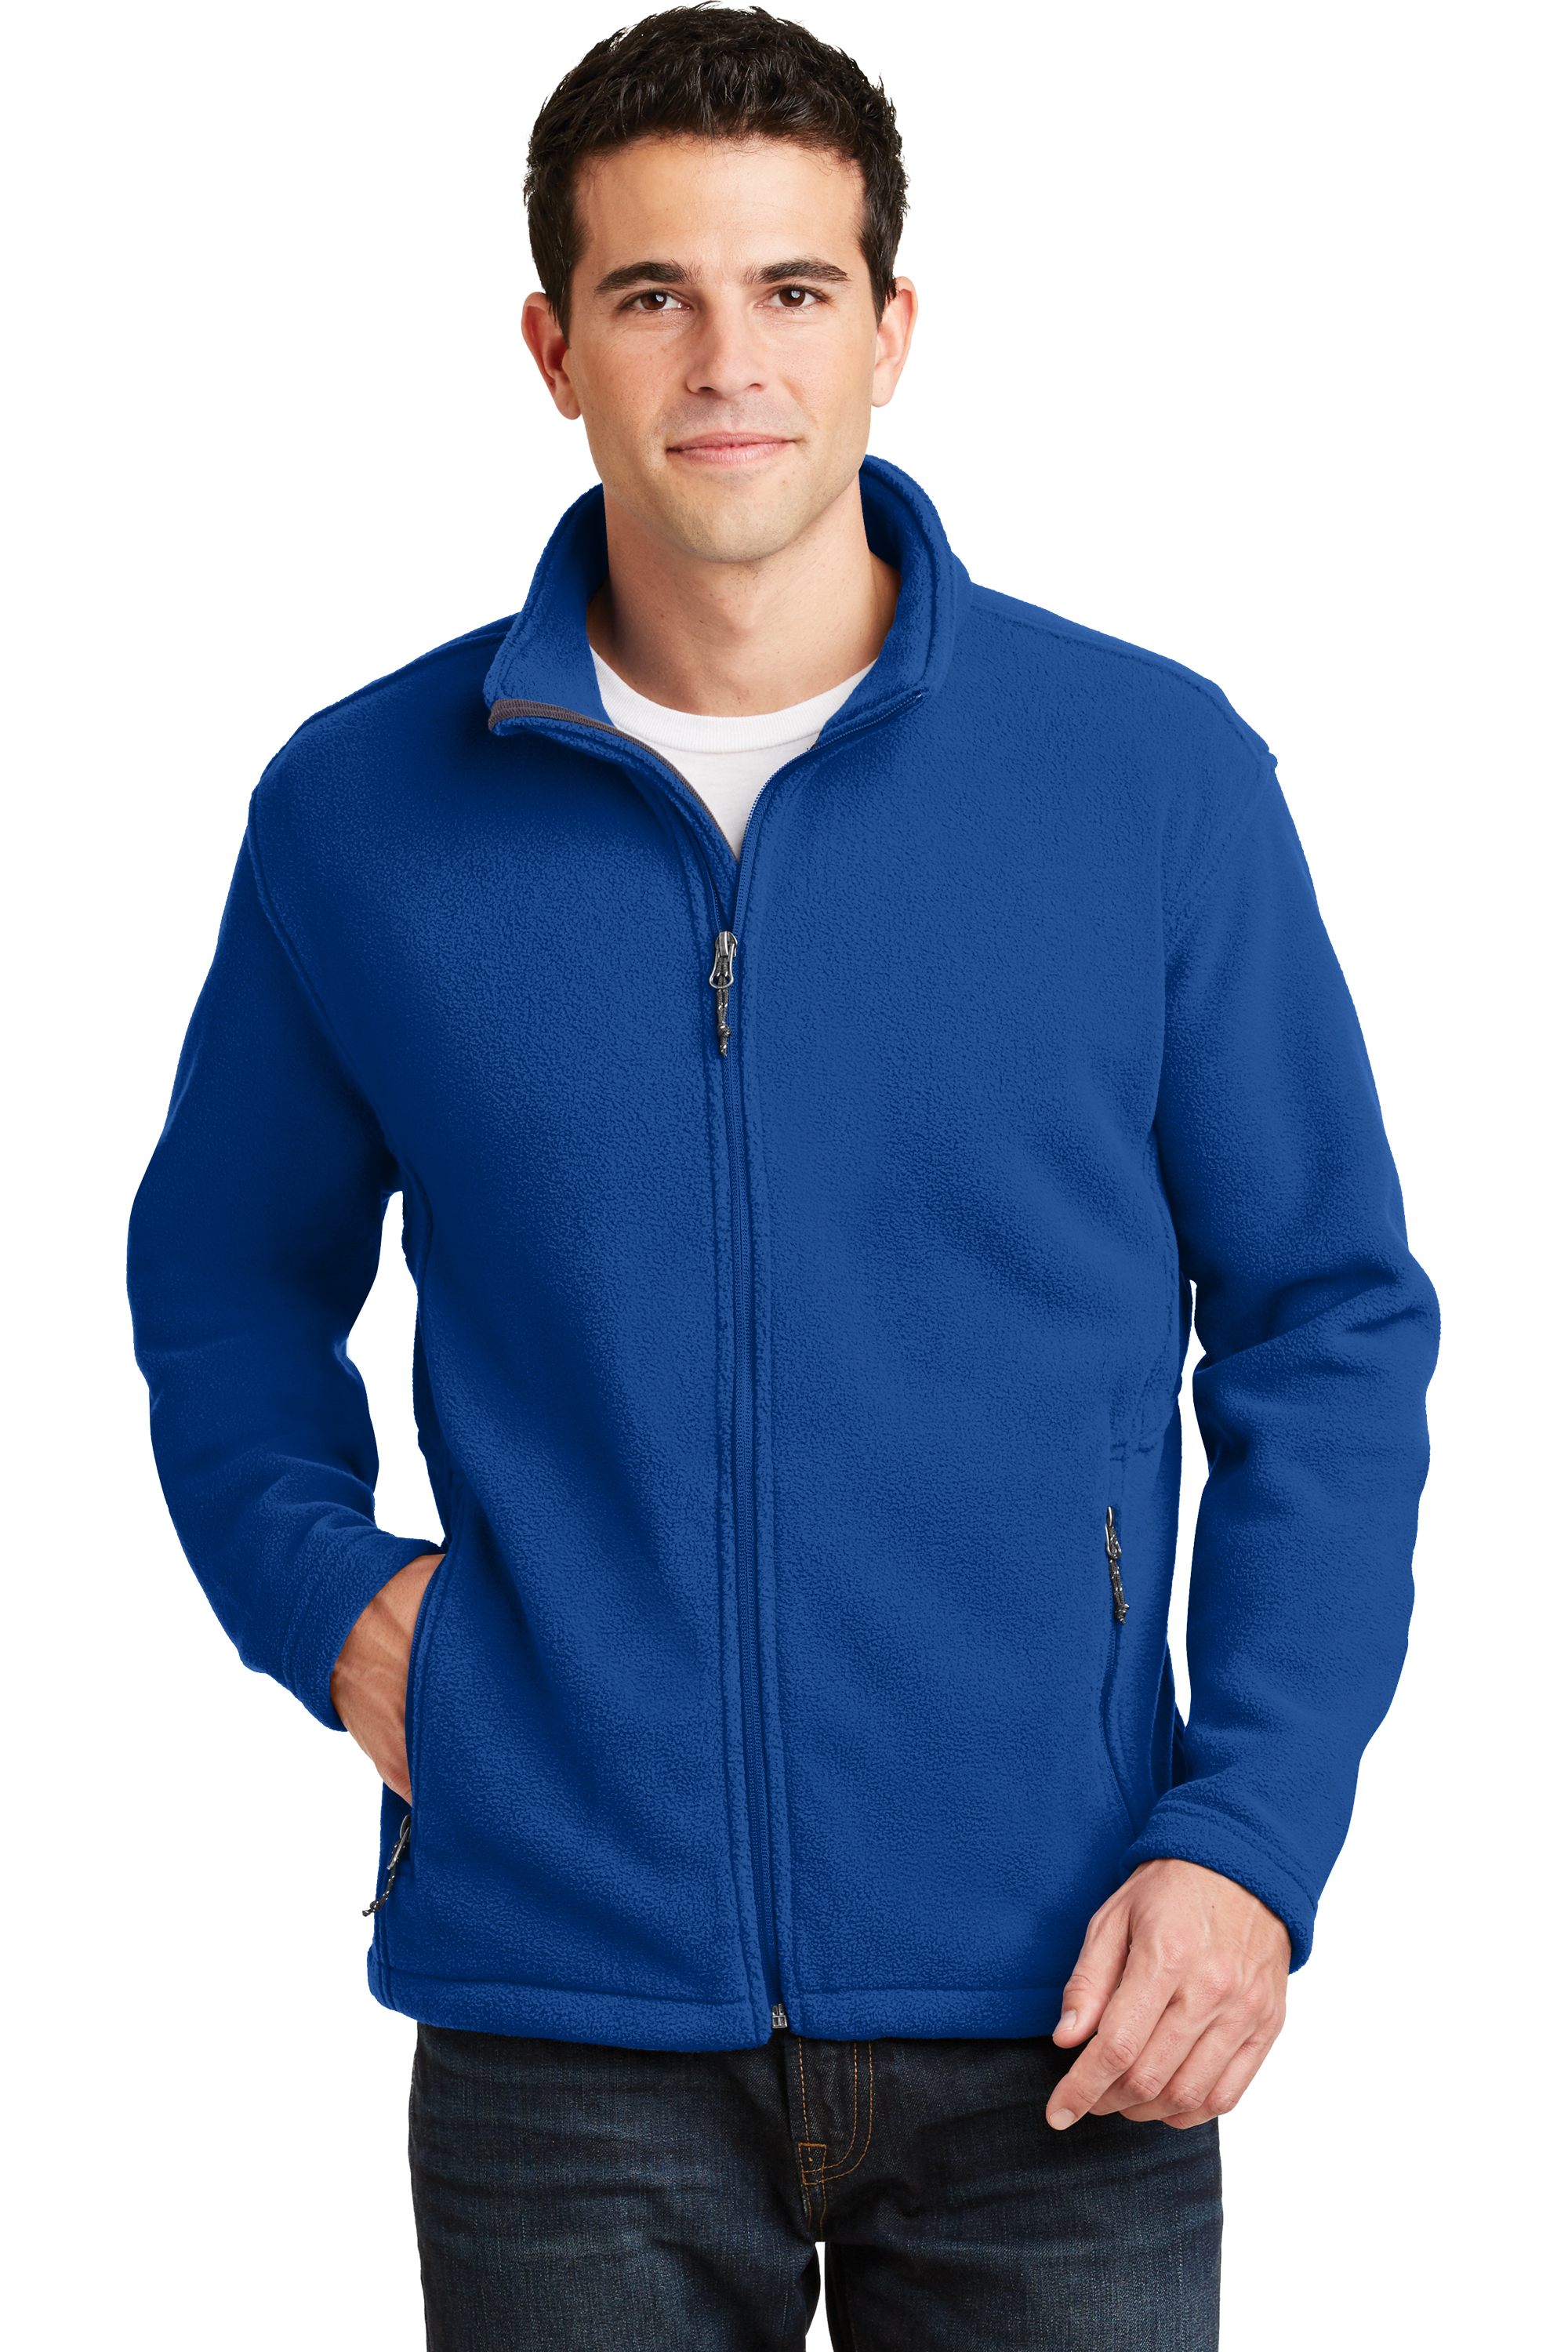 Men’s Fleece Jacket – Trellis Uniform Apparel